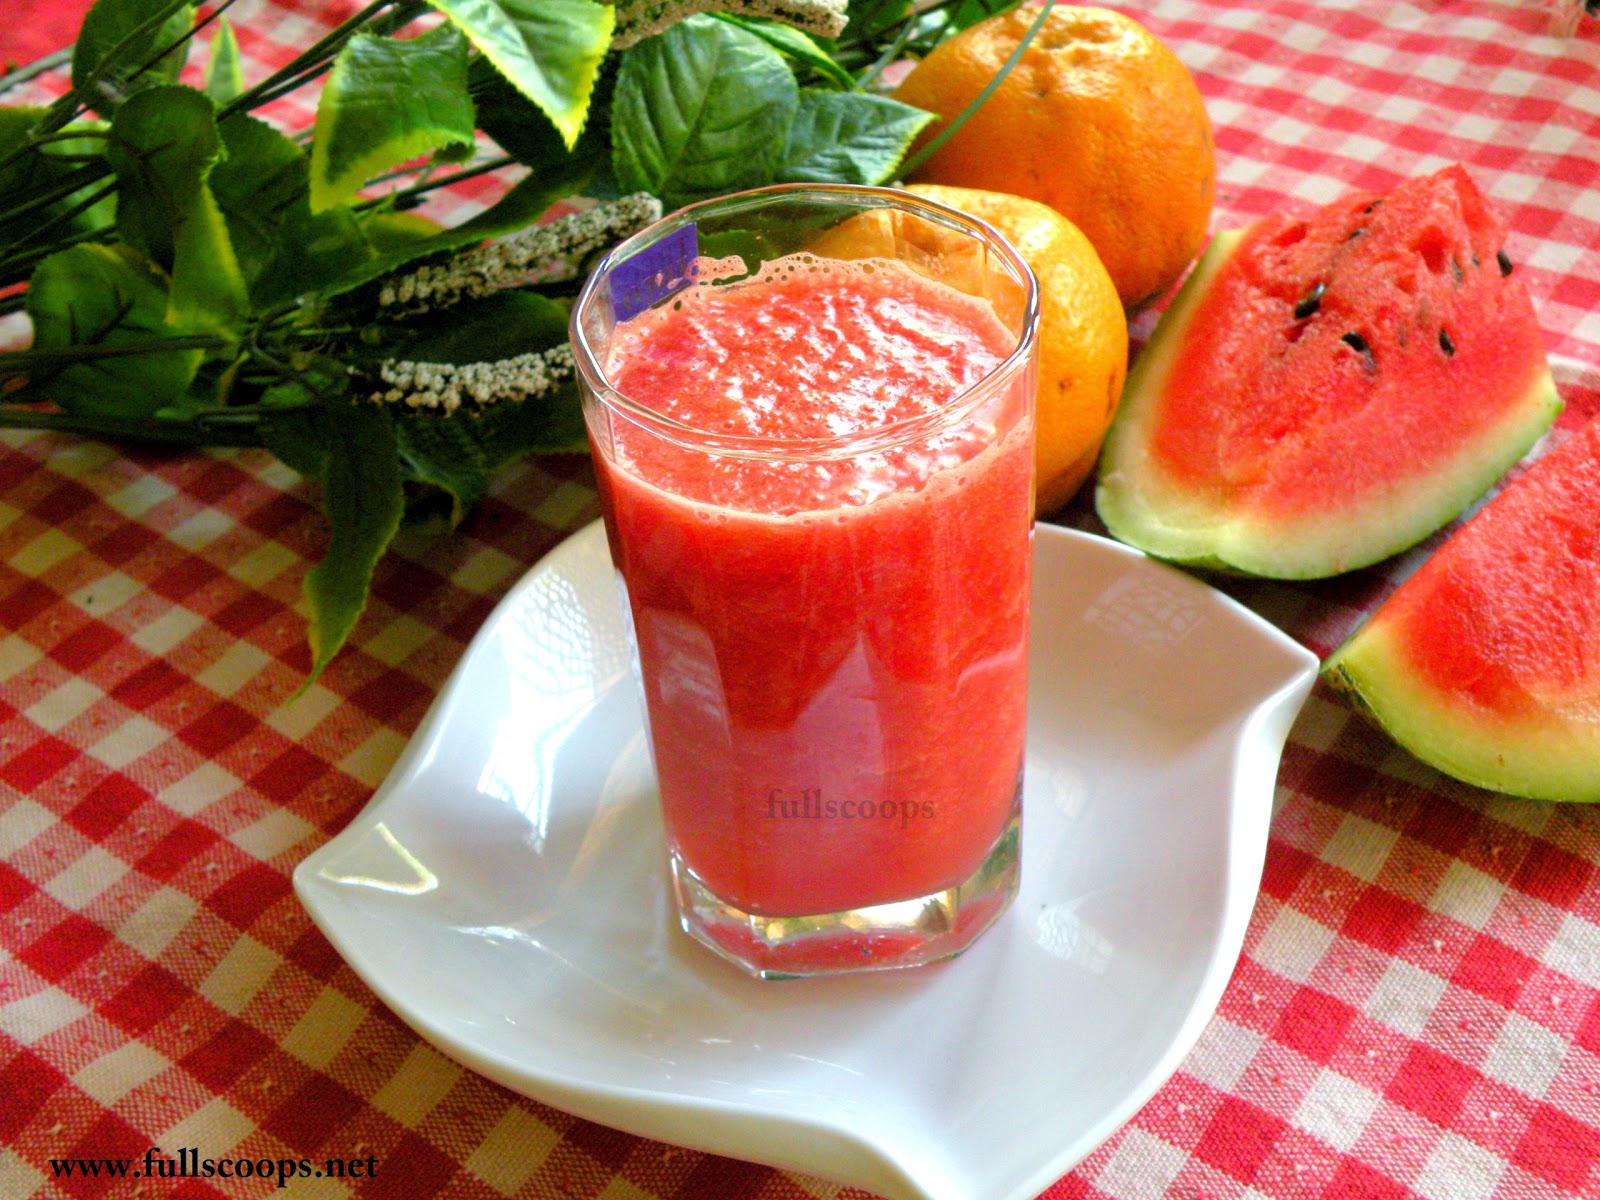 Watermelon Orange Juice